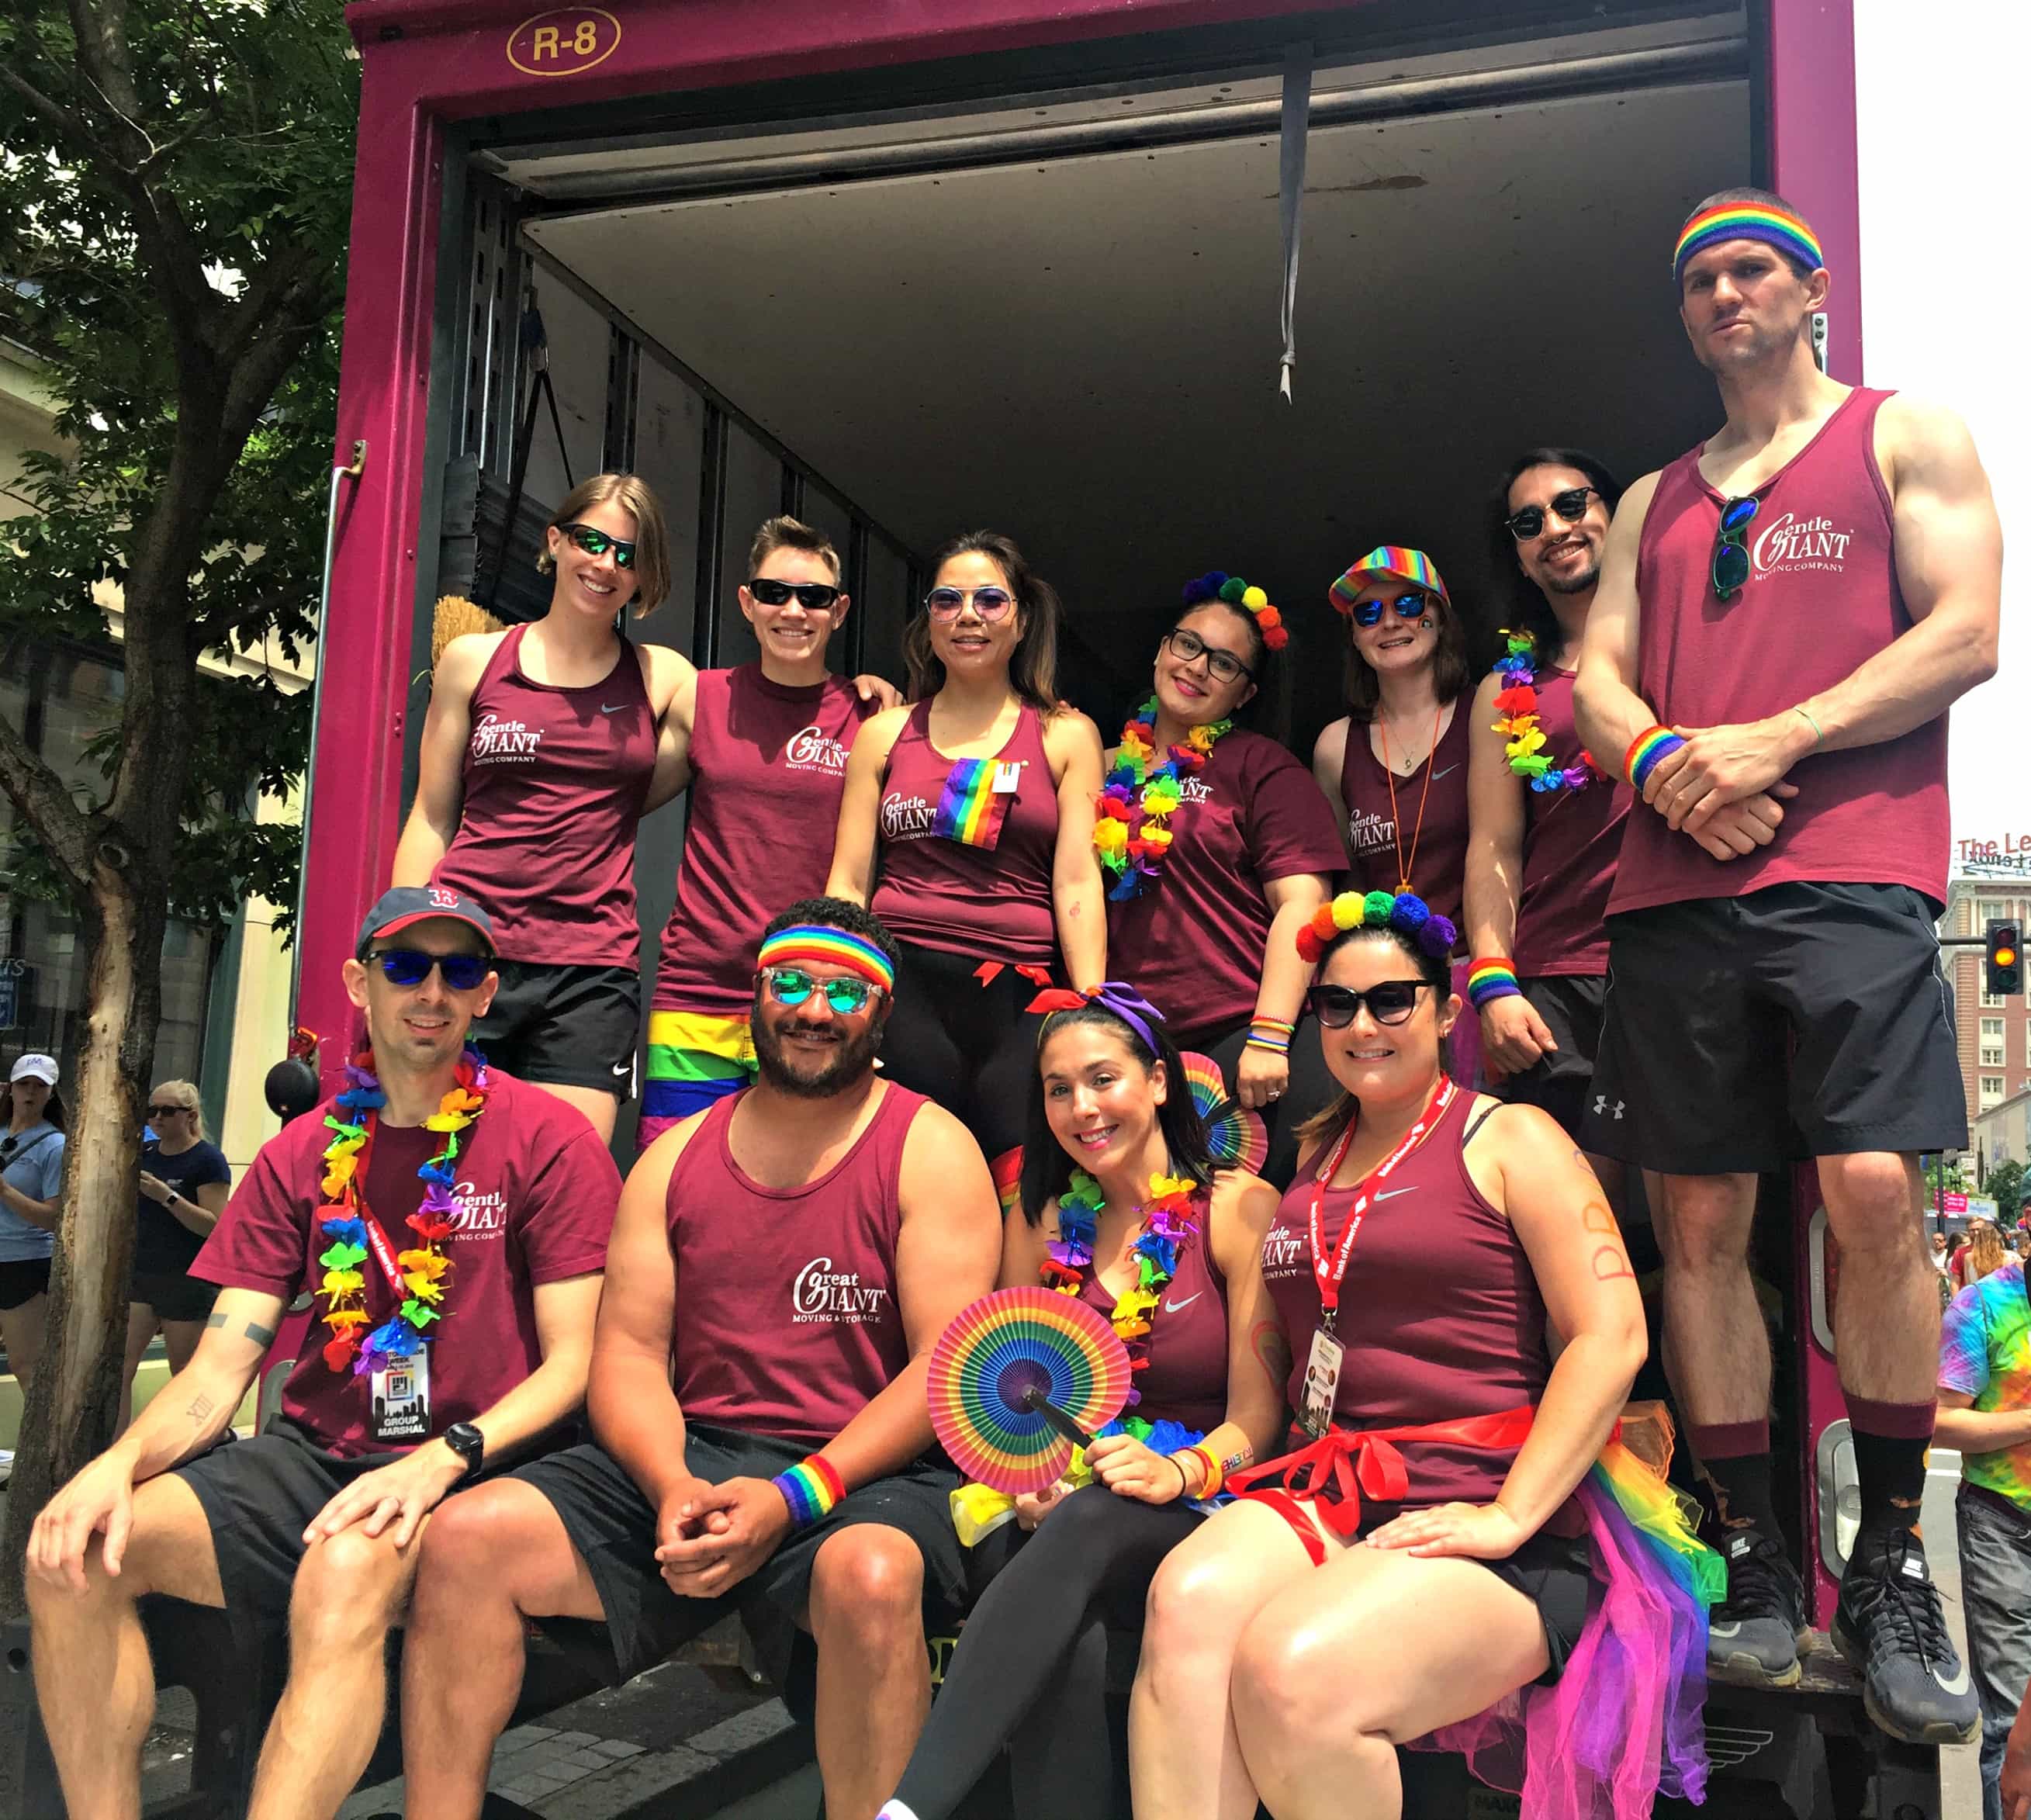 Gentle Giant Headquarters and Regions Participate in Pride 2018